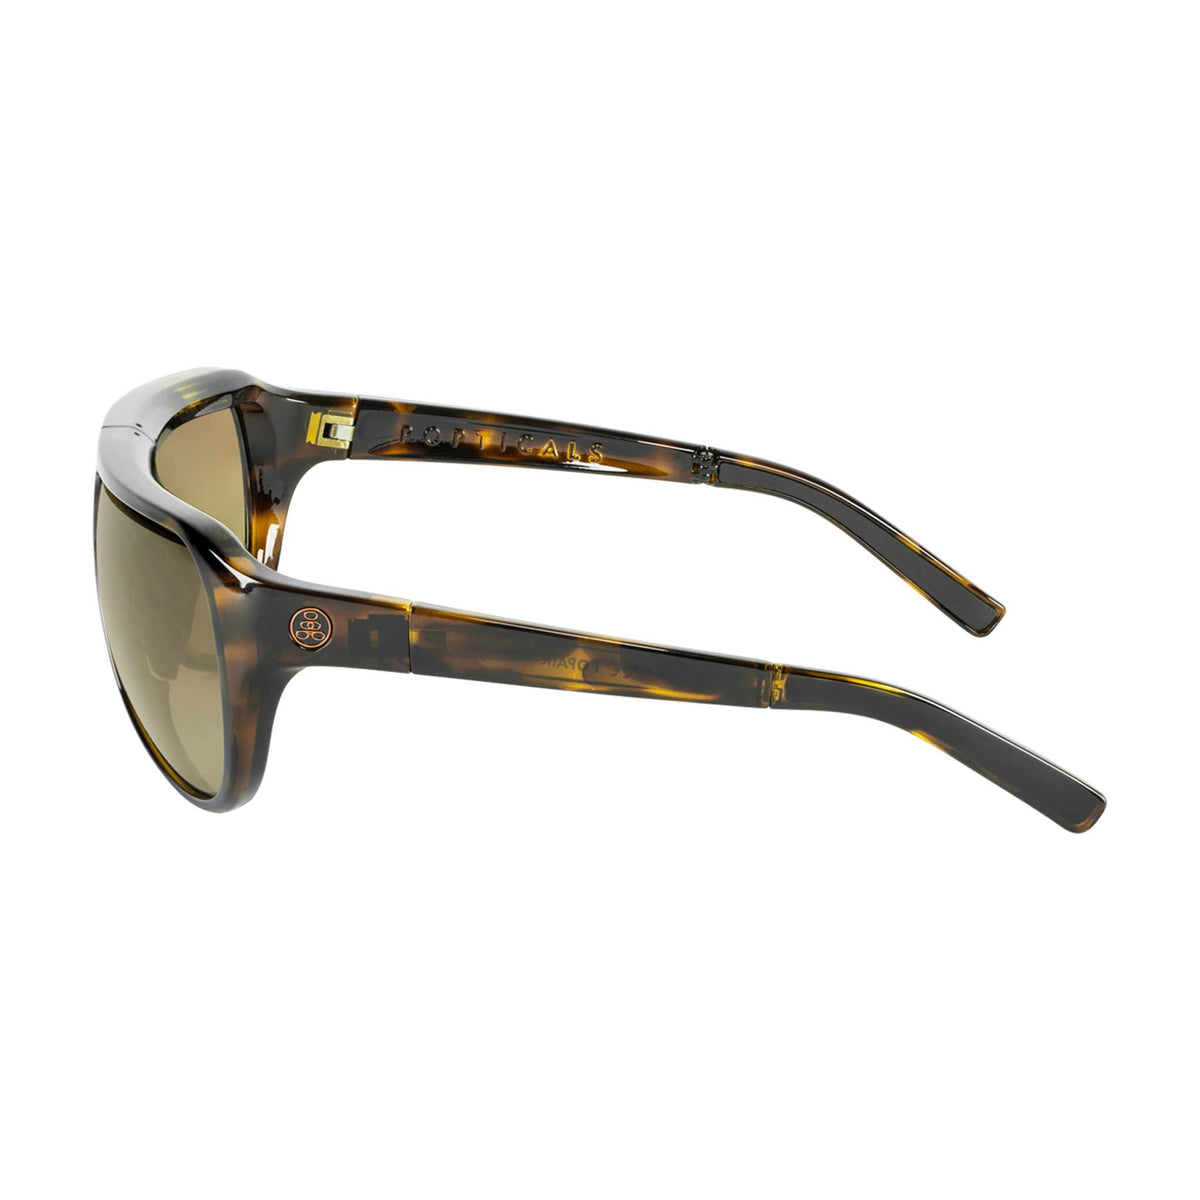 Popticals, Premium Compact Sunglasses, PopAir, 300010-CTNC, Polarized Sunglasses, Gloss Tortoise Frame, Gradient Brown Lenses, Side View